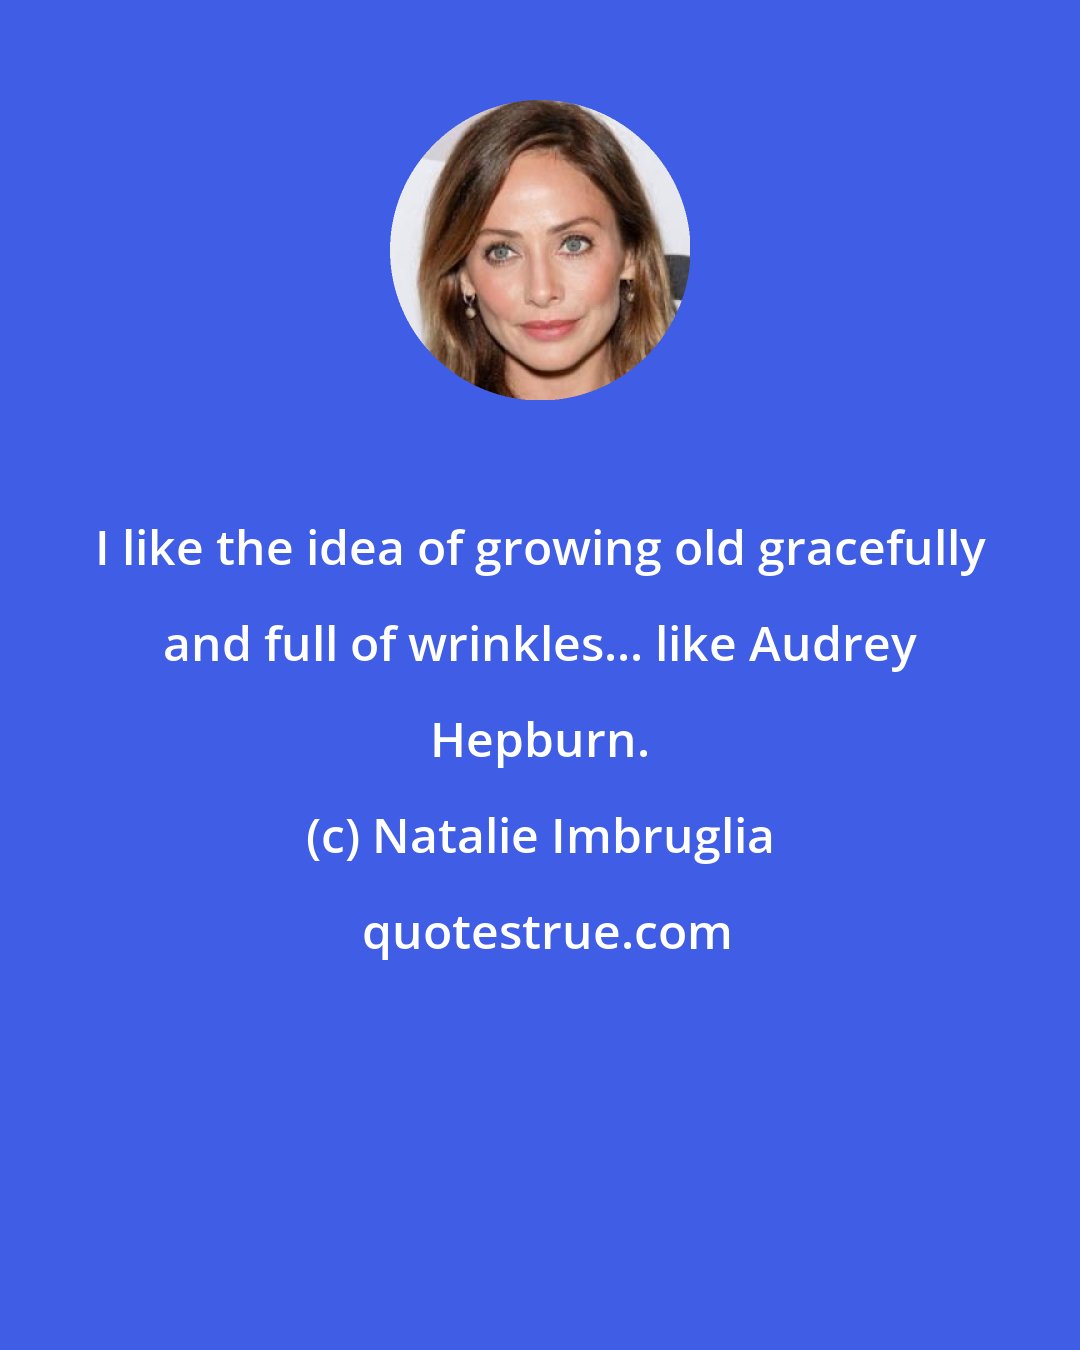 Natalie Imbruglia: I like the idea of growing old gracefully and full of wrinkles... like Audrey Hepburn.